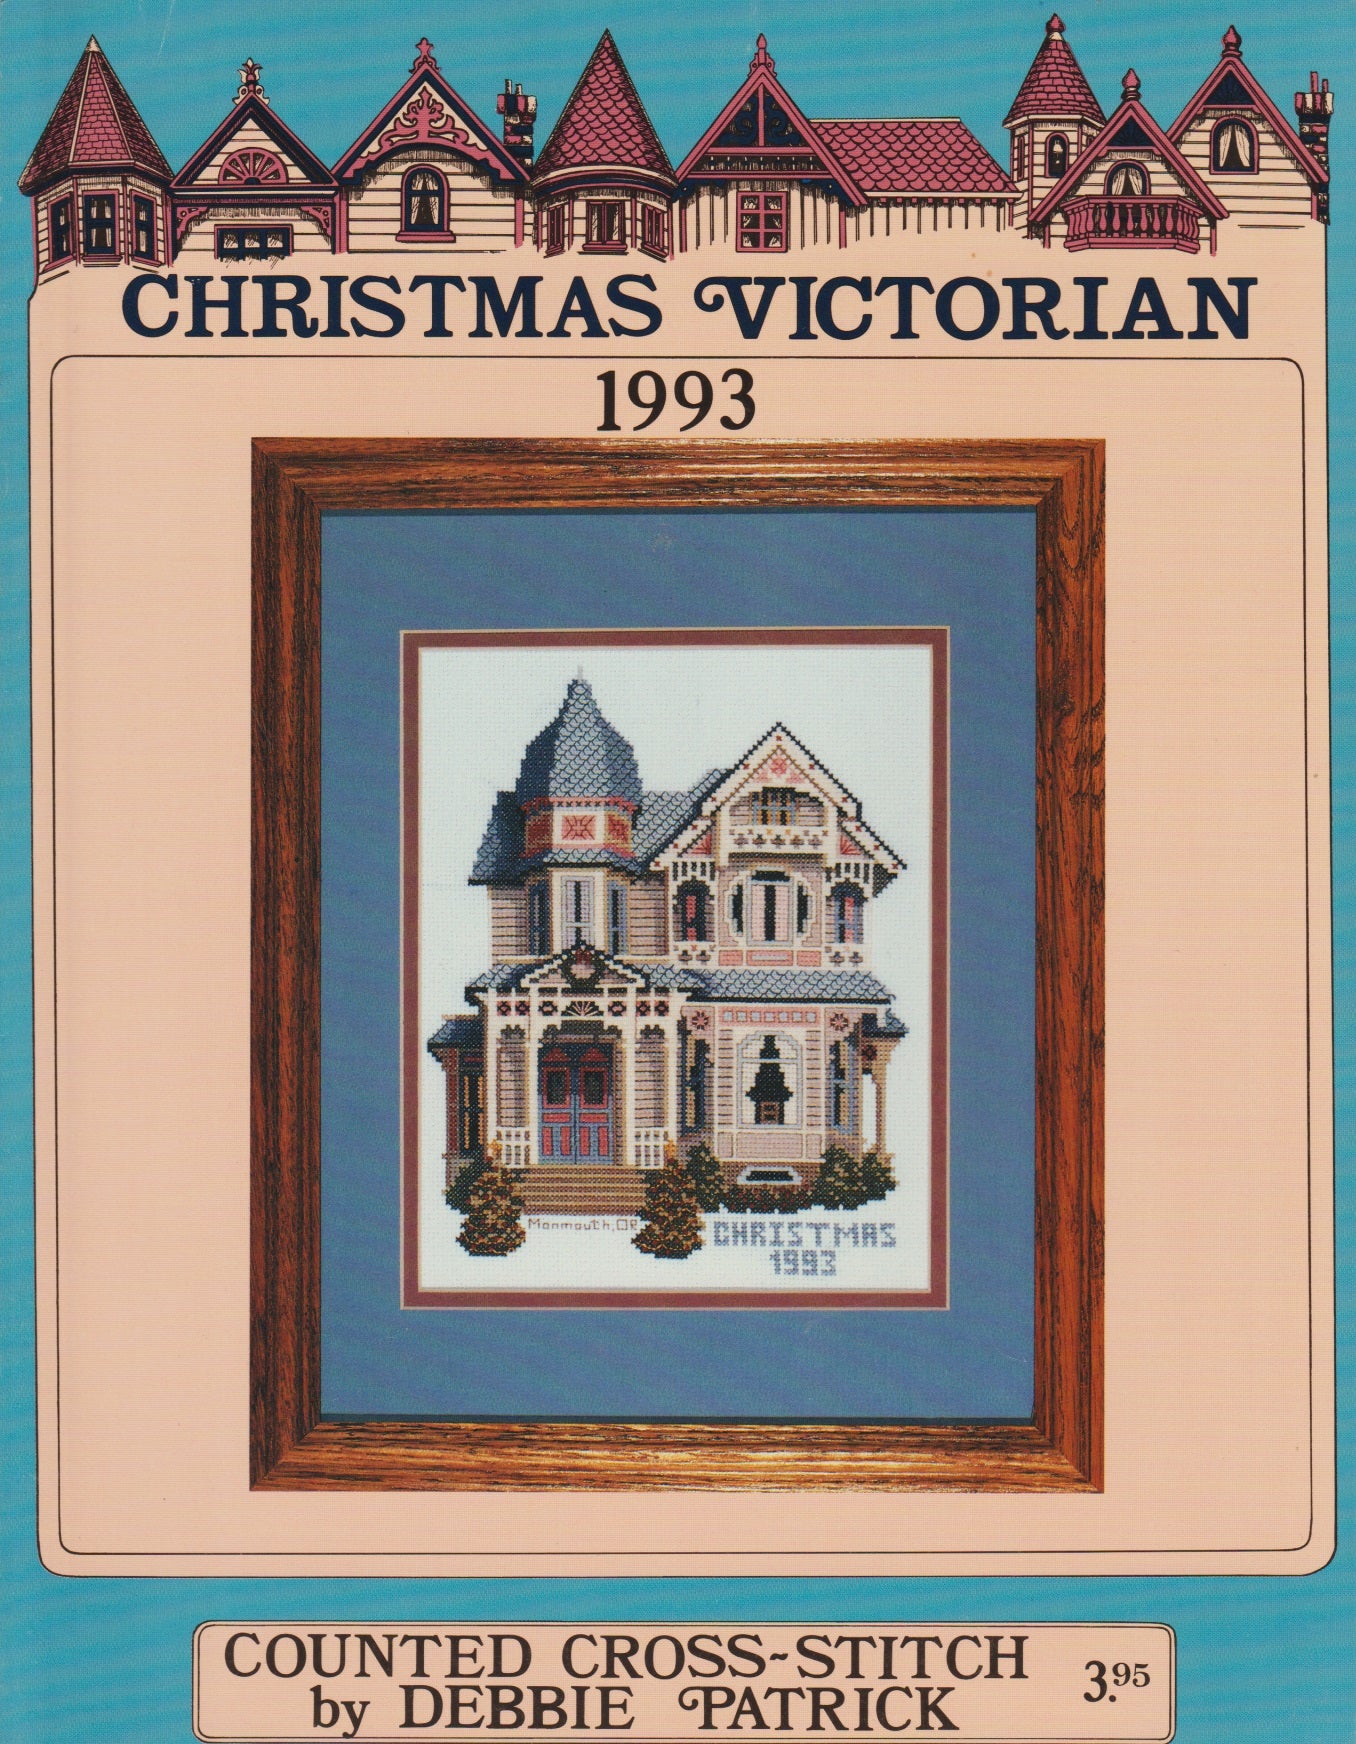 Debbie Patrick Christmas Victorian 1993 cross stitch pattern